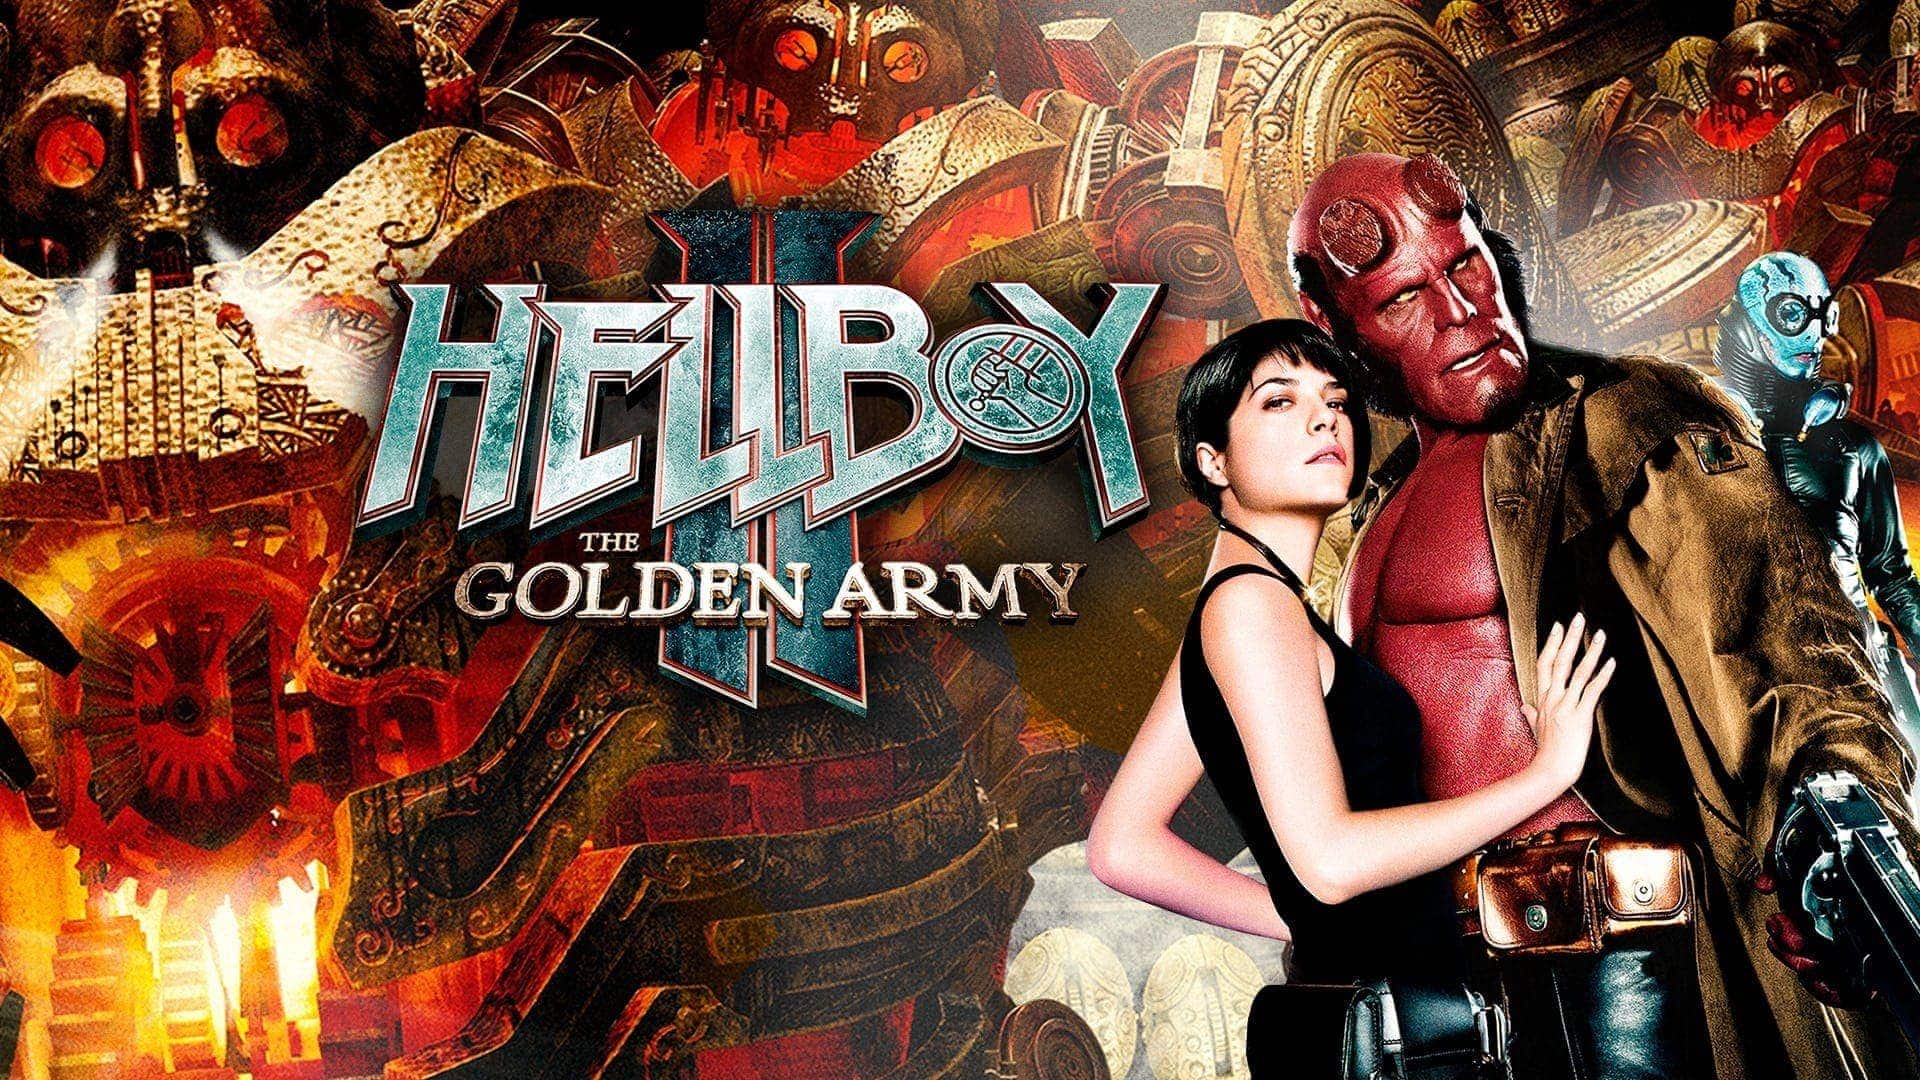 Watch Hellboy II: The Golden Army Online | Stream Full Movies